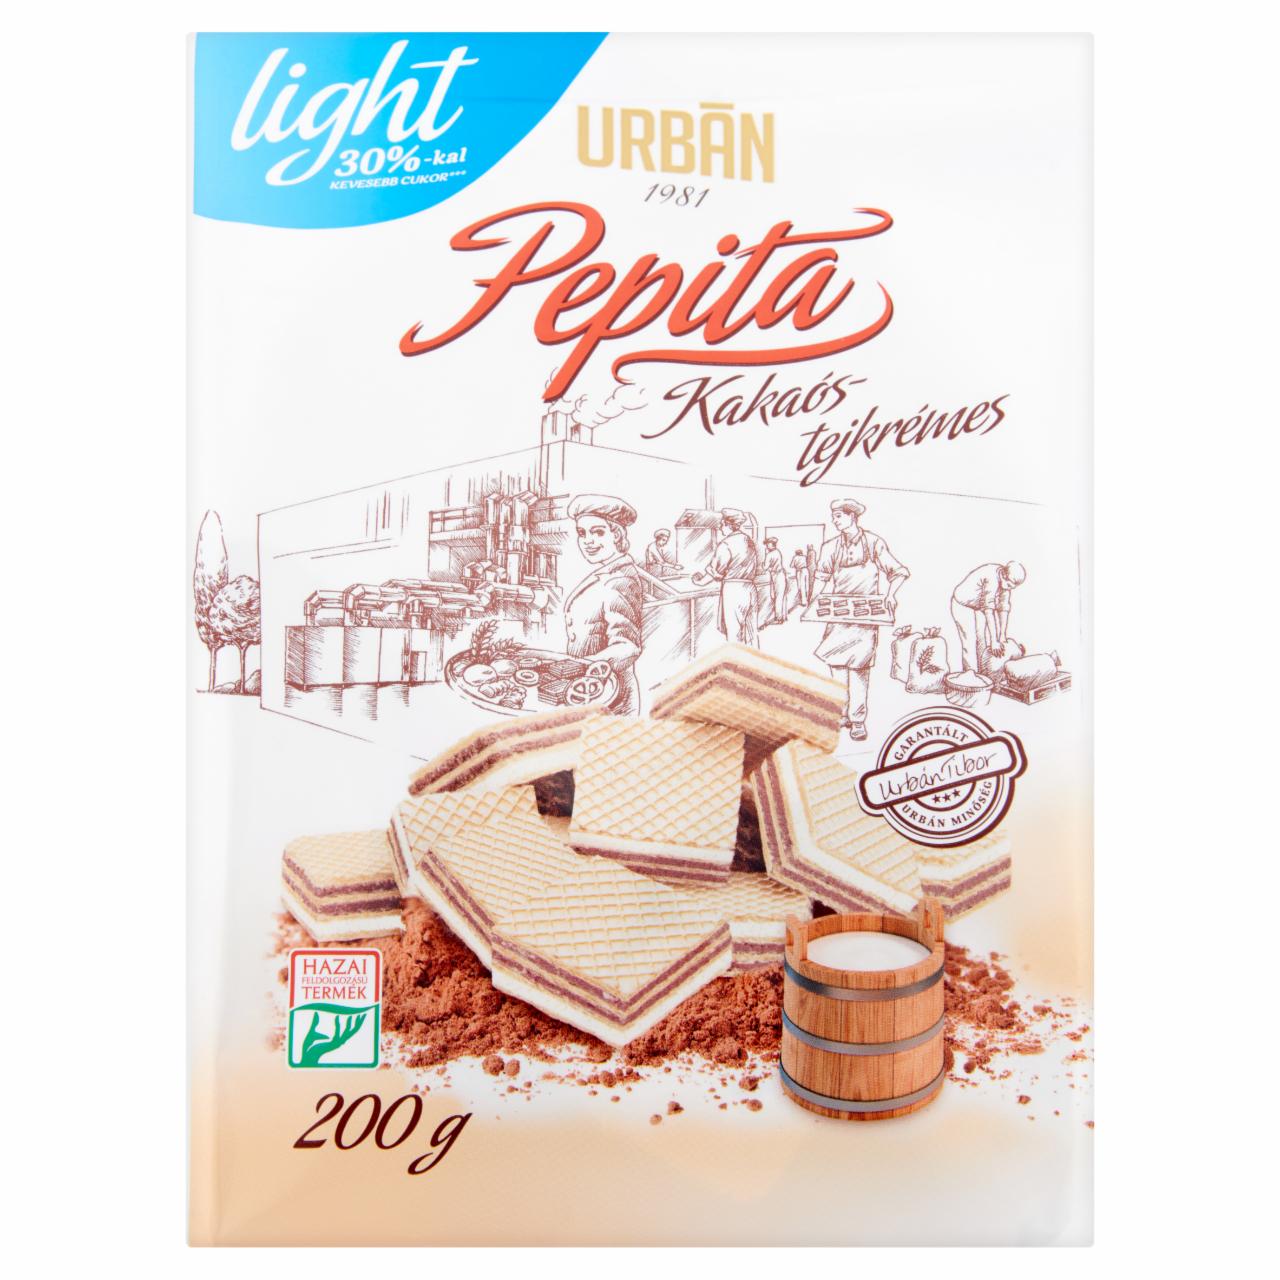 Képek - Urbán Pepita kakaós-tejkrémes nápolyi 200 g